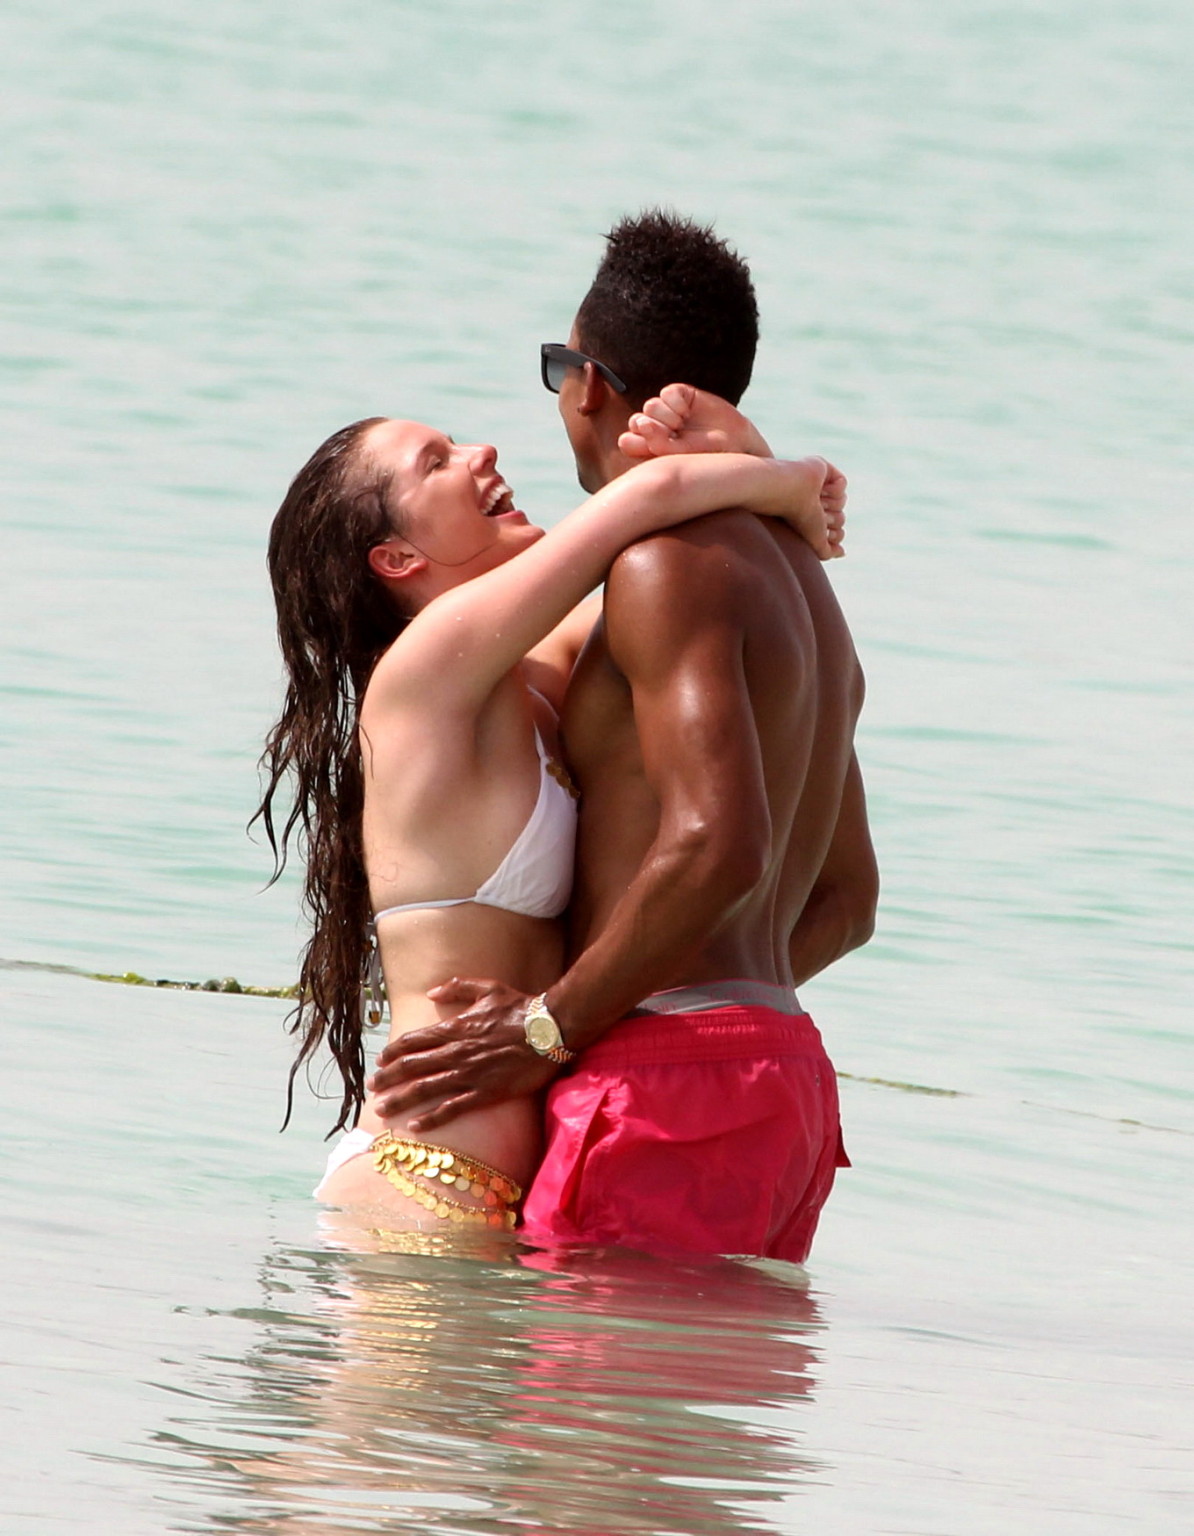 Helen Flanagan busty in bikini  making out with her boyfriend on a beach in Duba #75258296